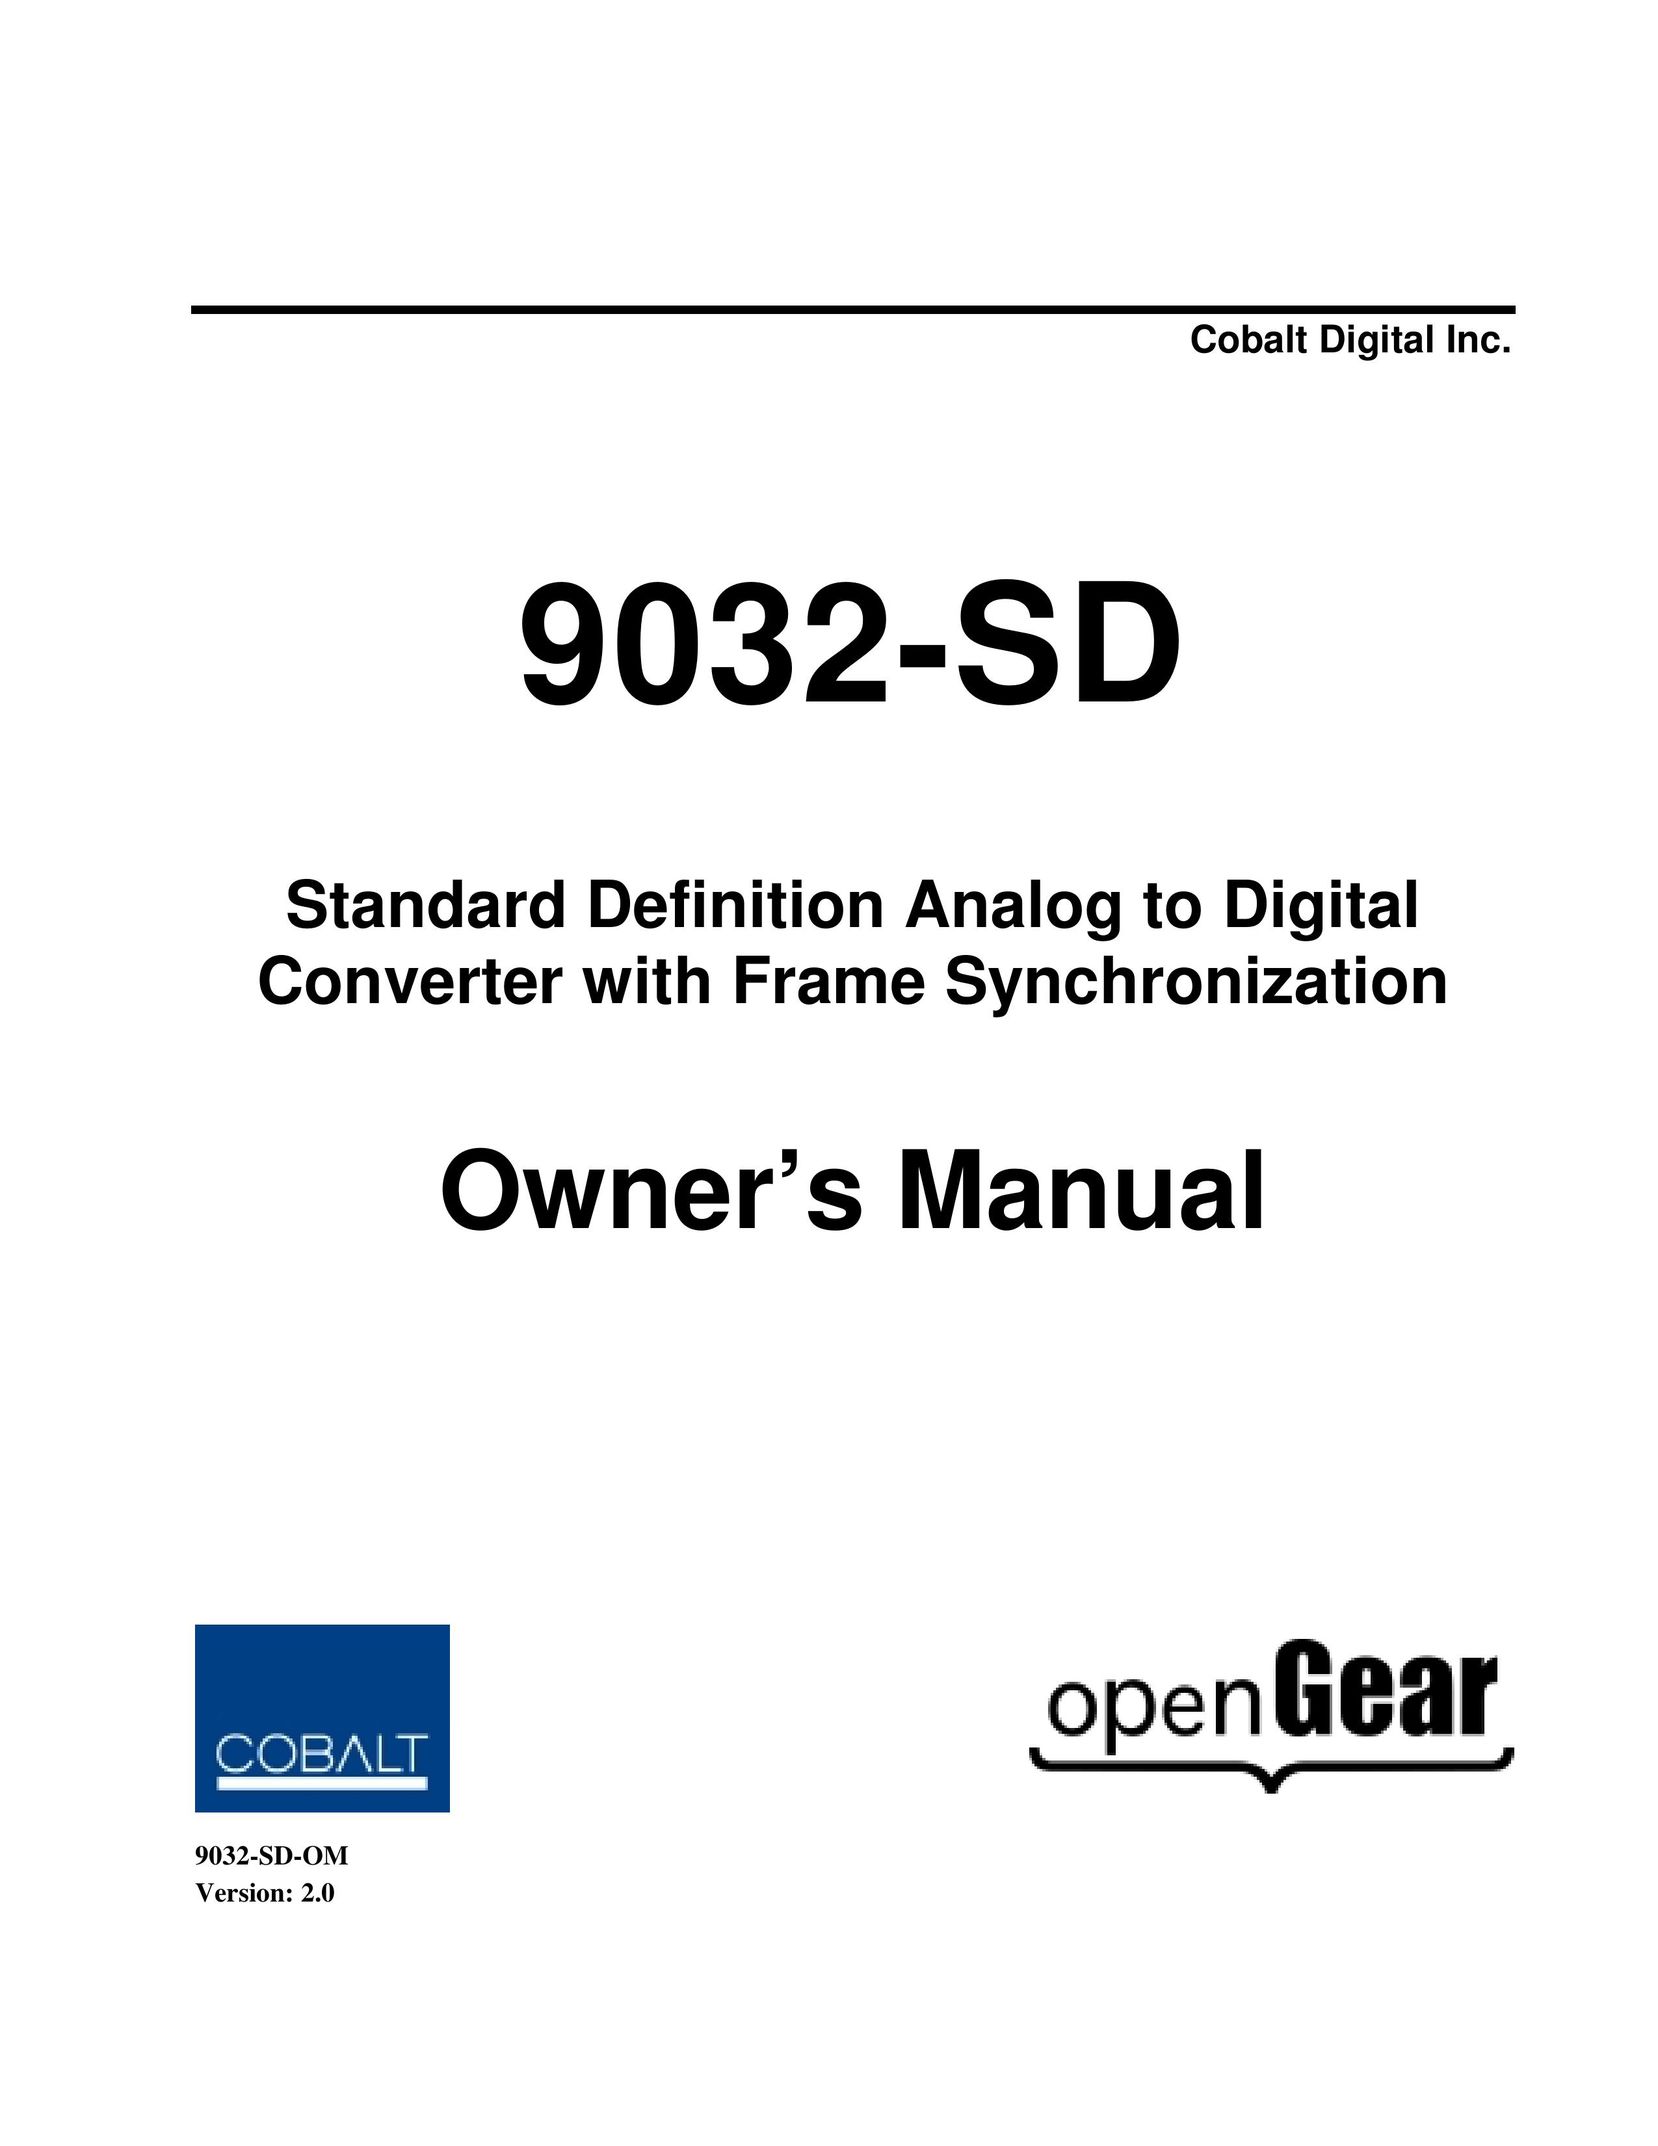 Cobalt Networks 9032-SD TV Converter Box User Manual